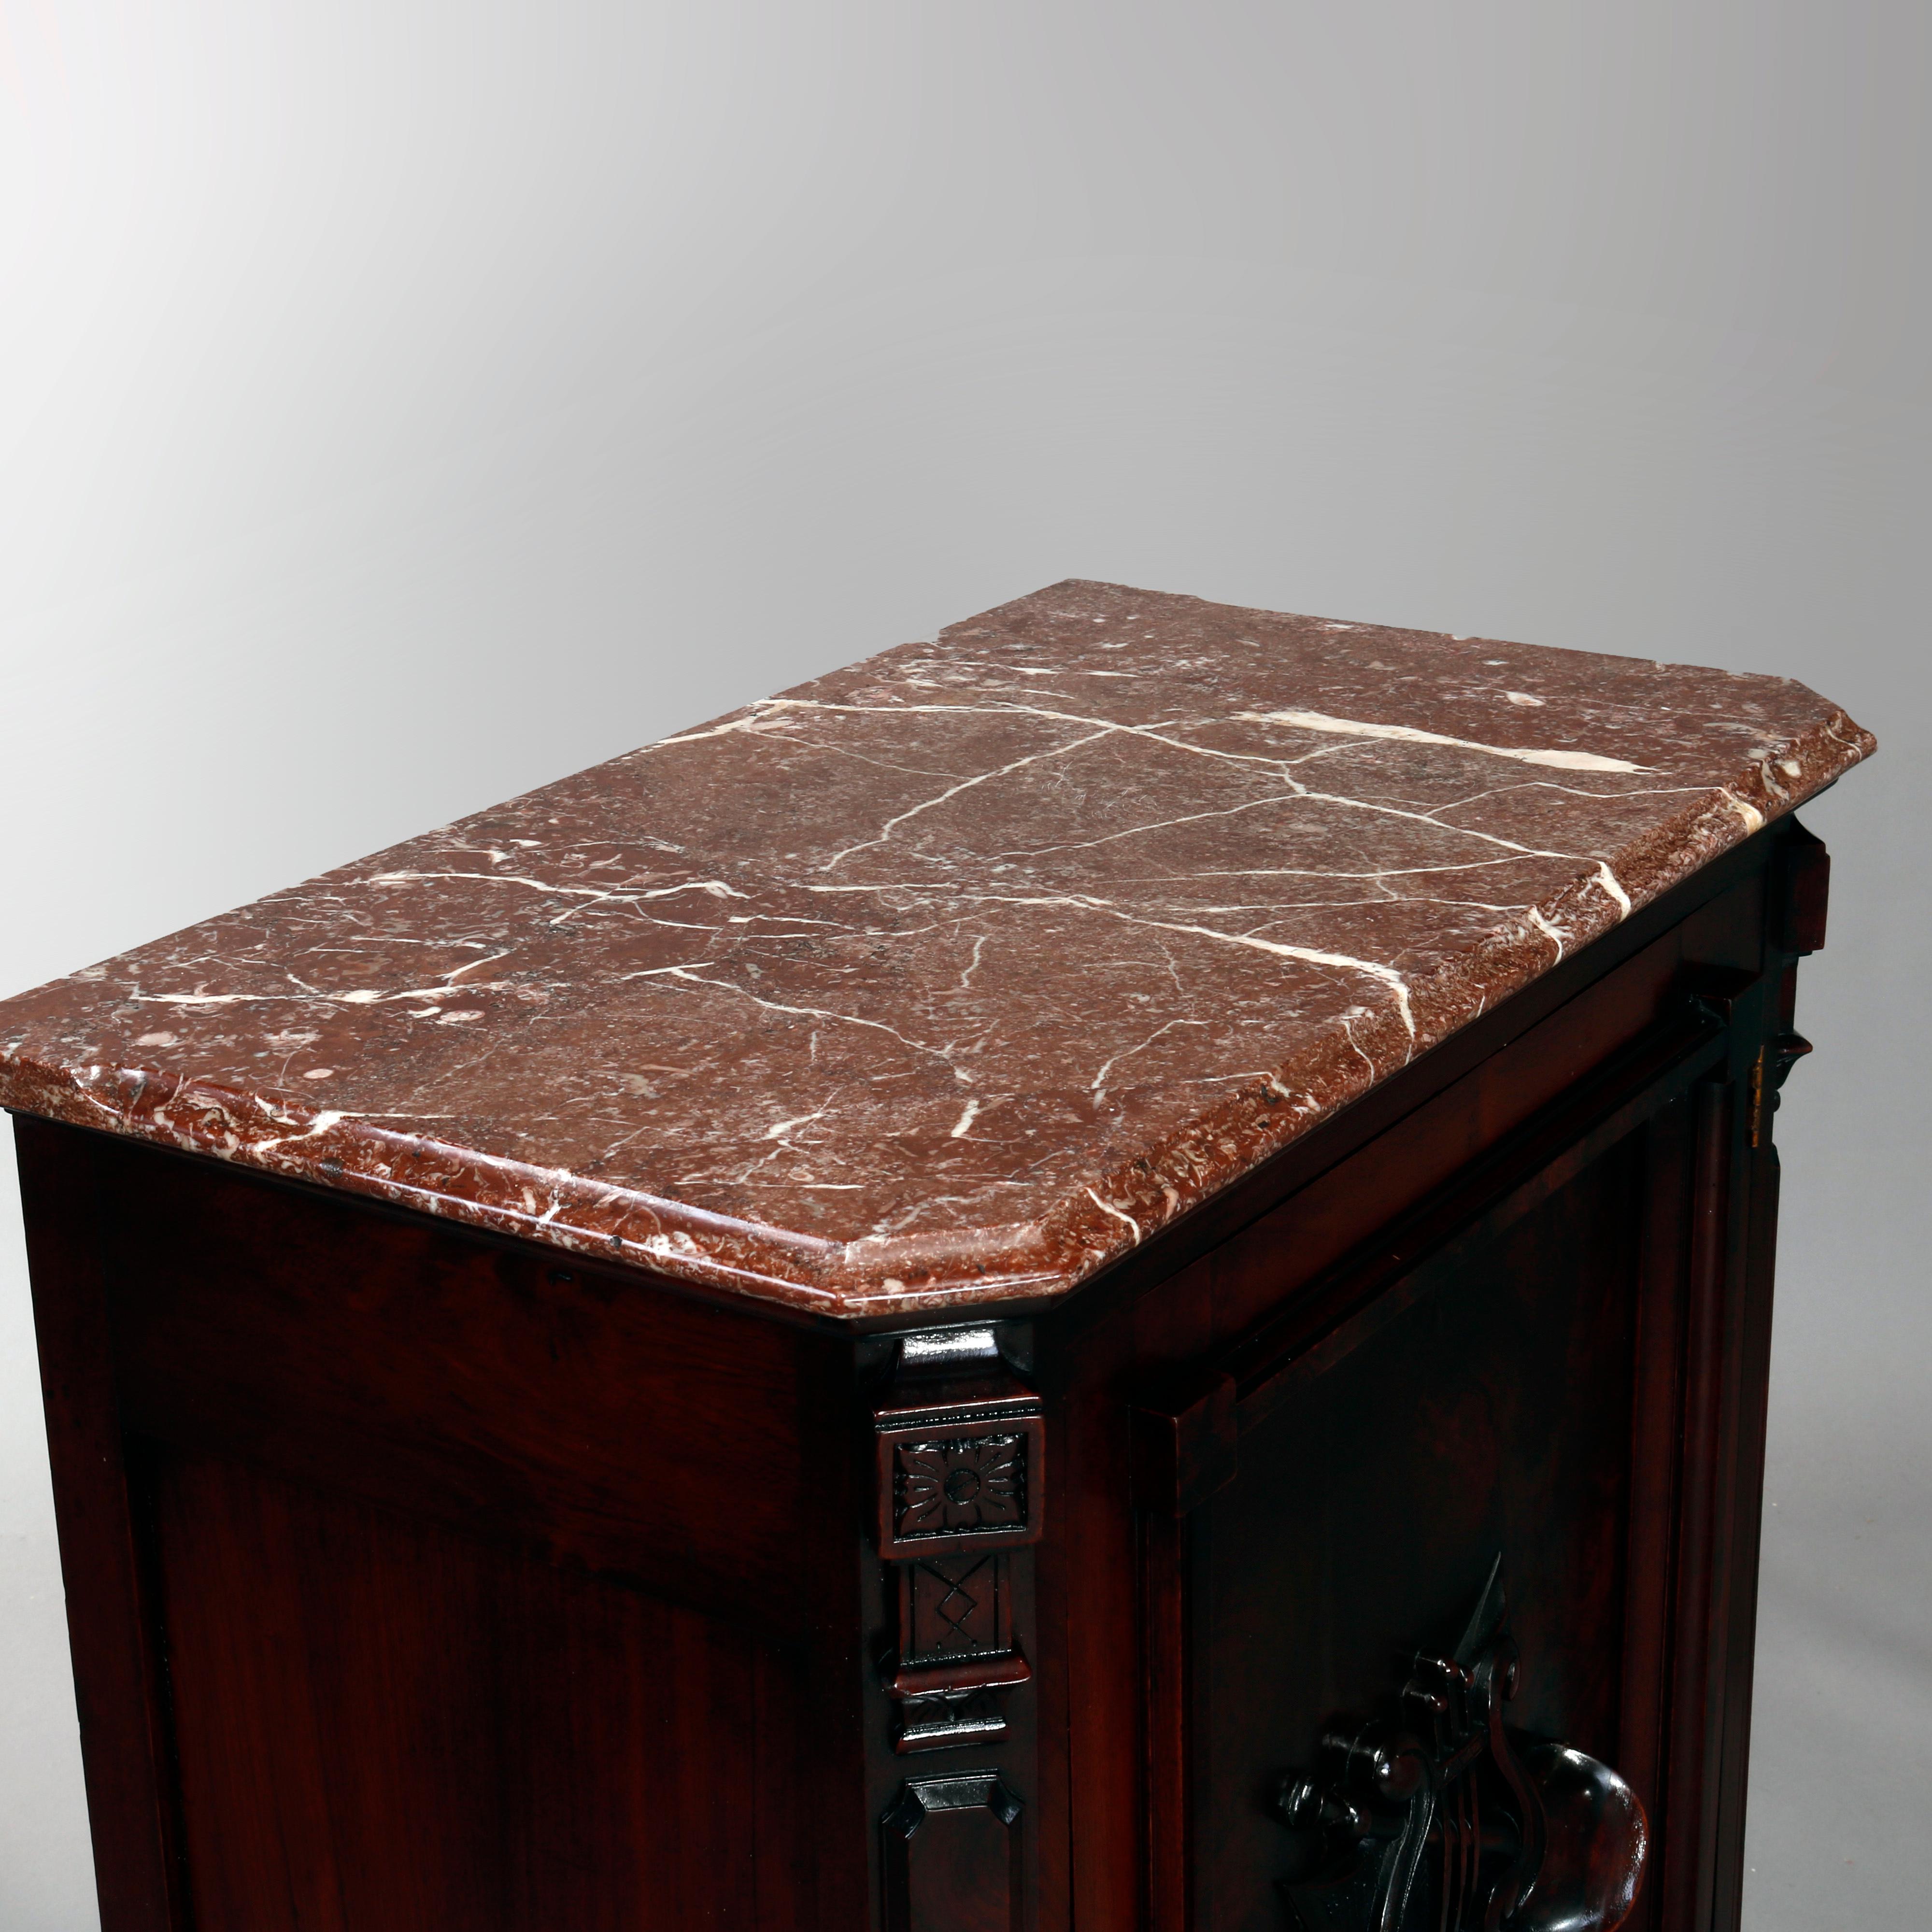 European Antique Renaissance Revival Walnut Music Cabinet with Rouge Marble Top, c1870